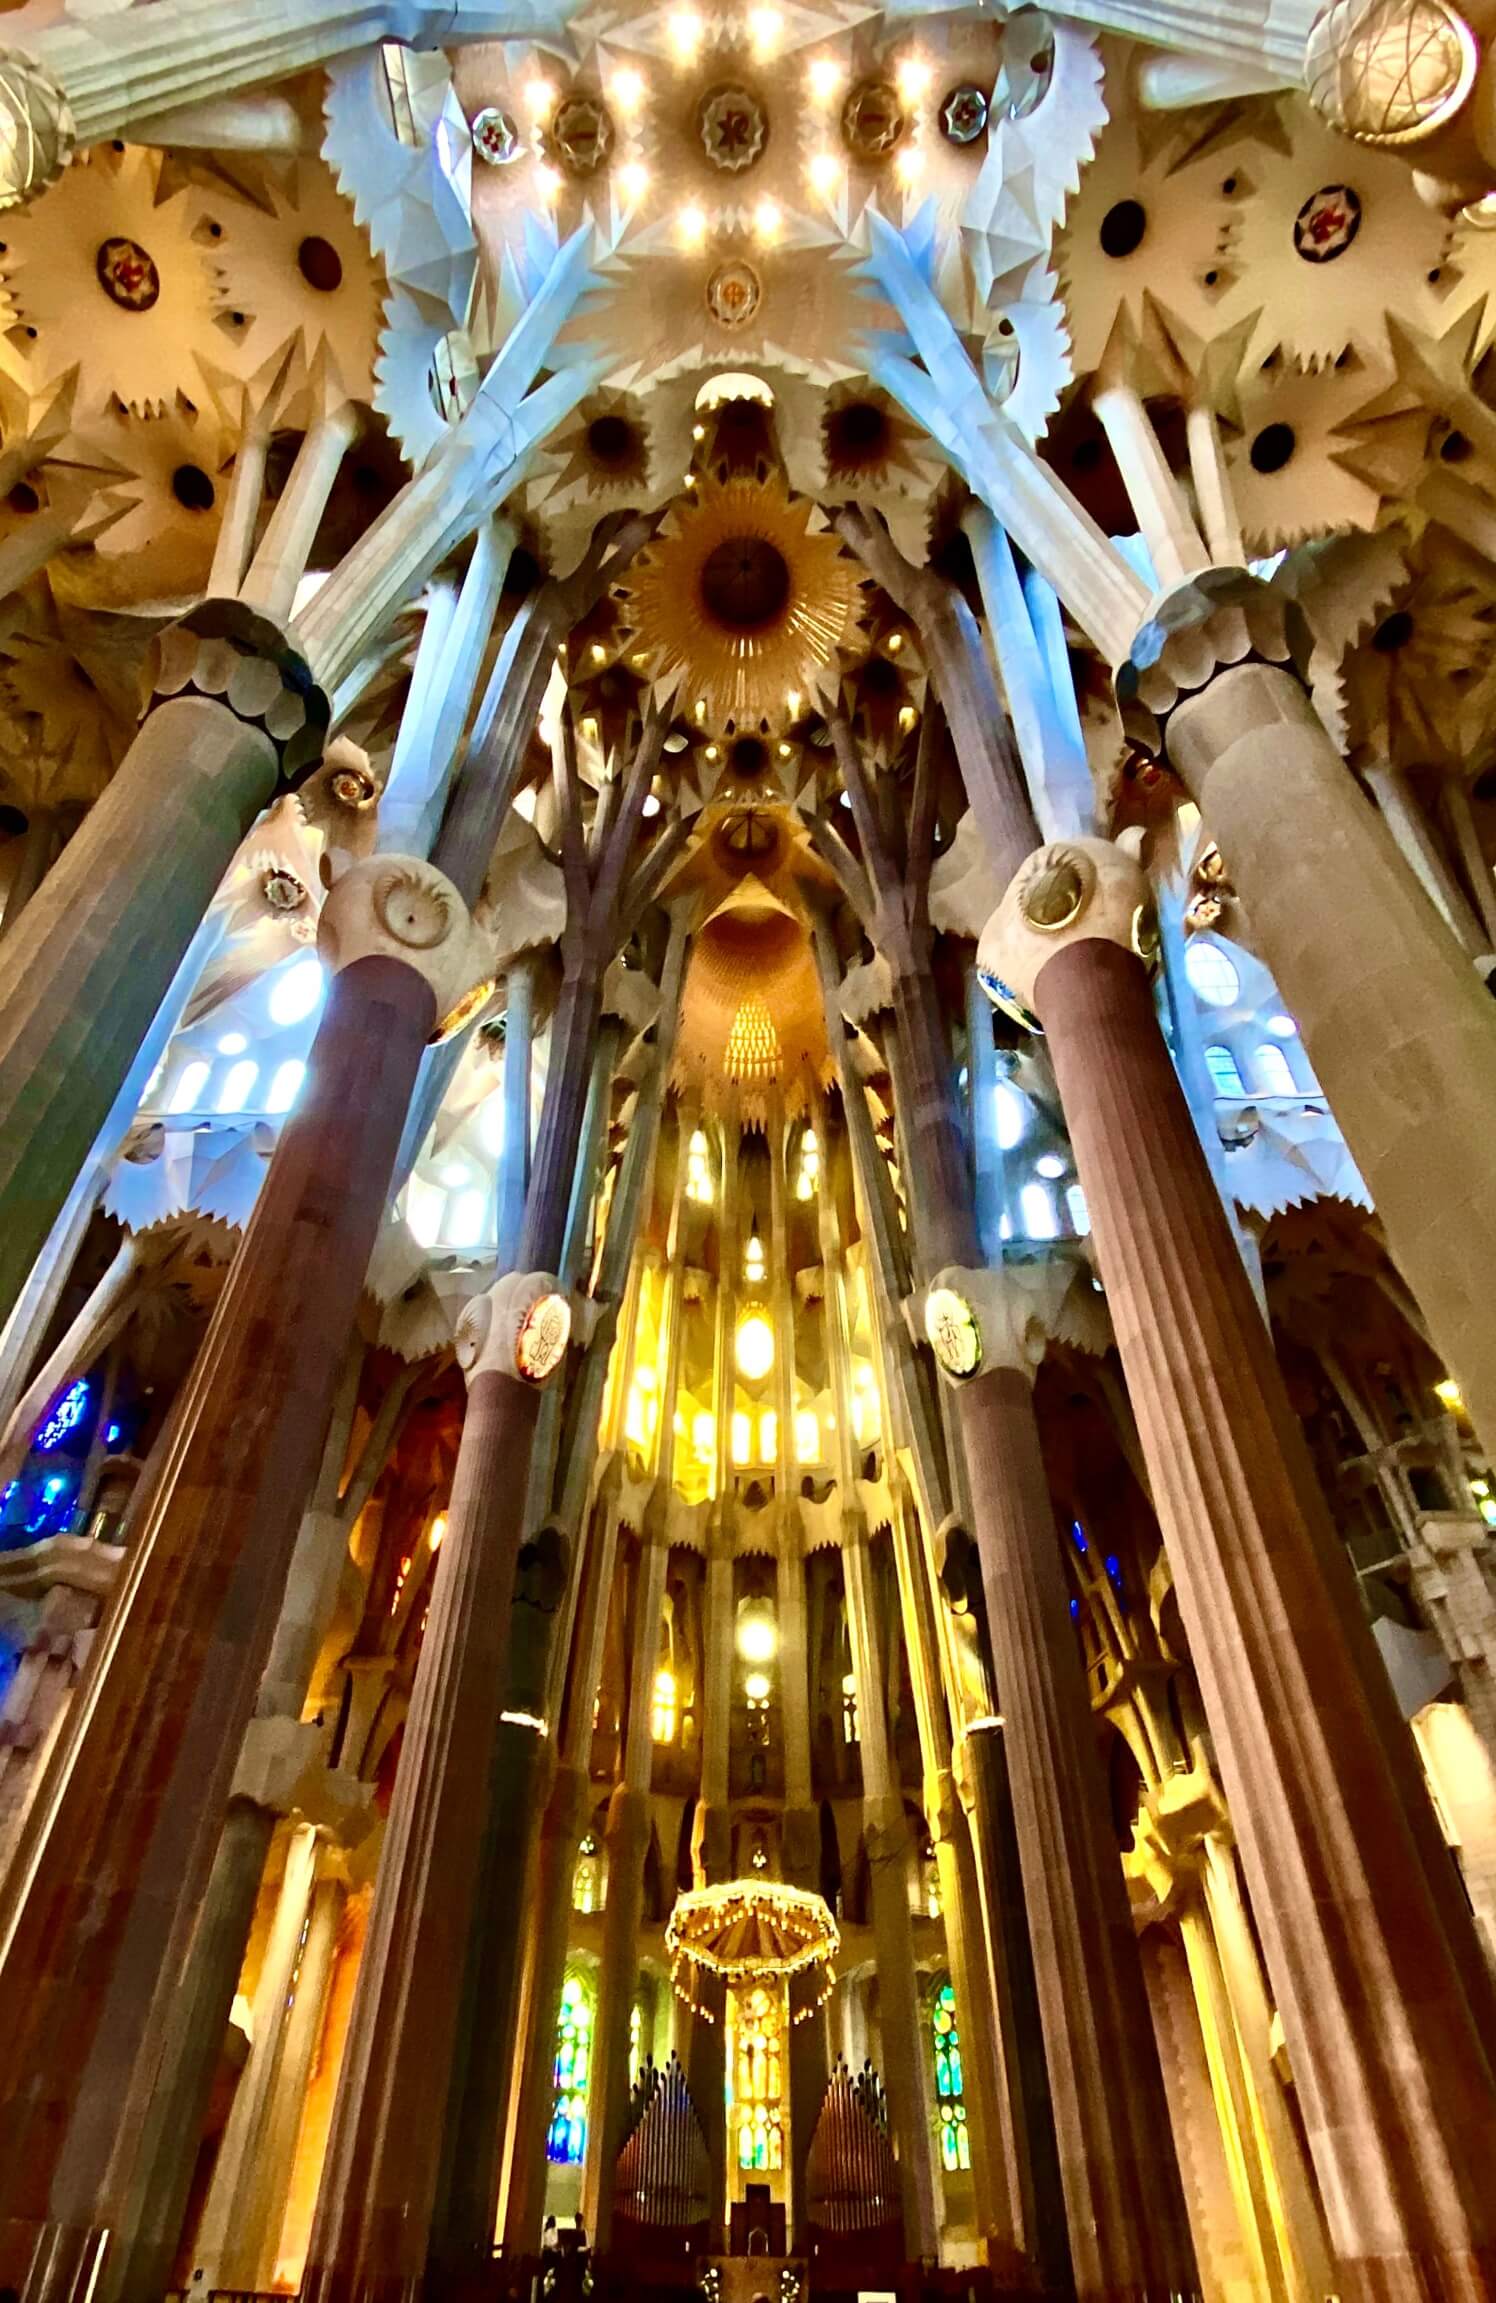 Sagrada Familia since 1882 mesmerizing everyone who visits it! The sequel.